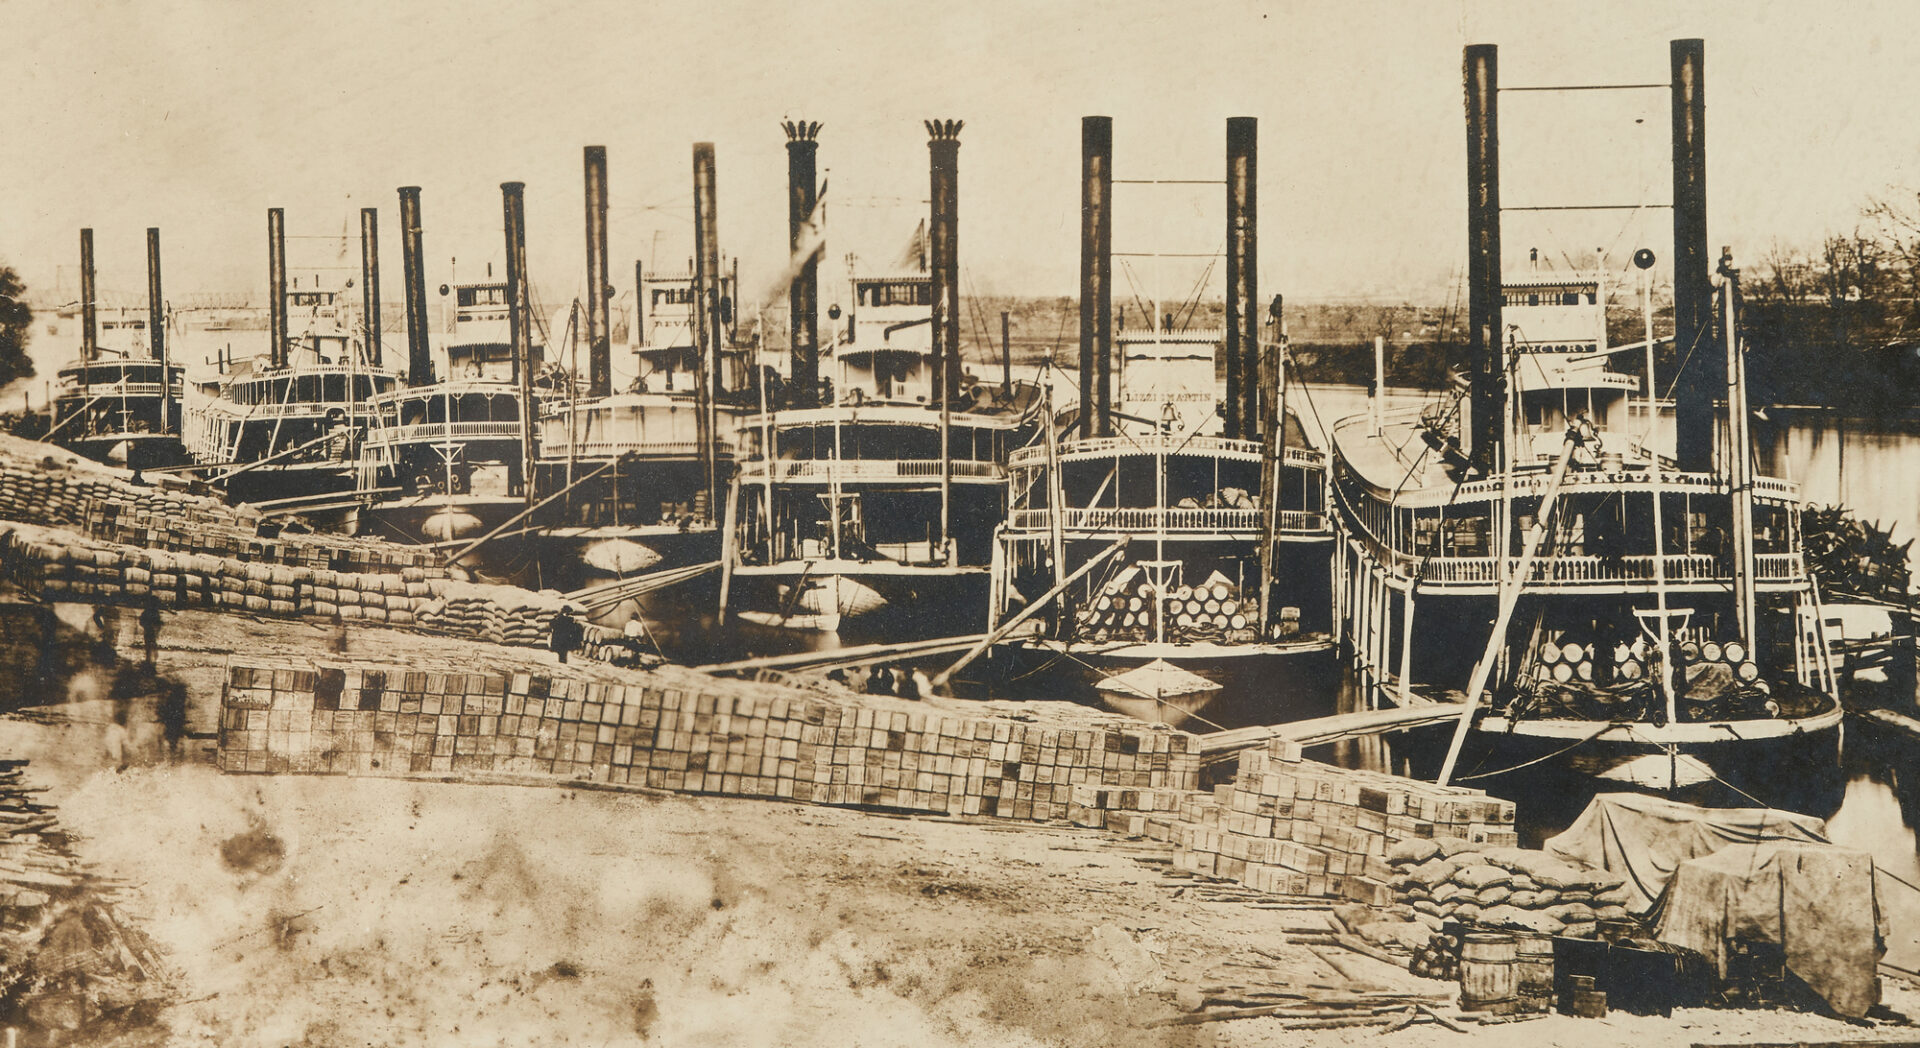 Lot 577: Civil War Era Nashville Wharf Photograph, 1864